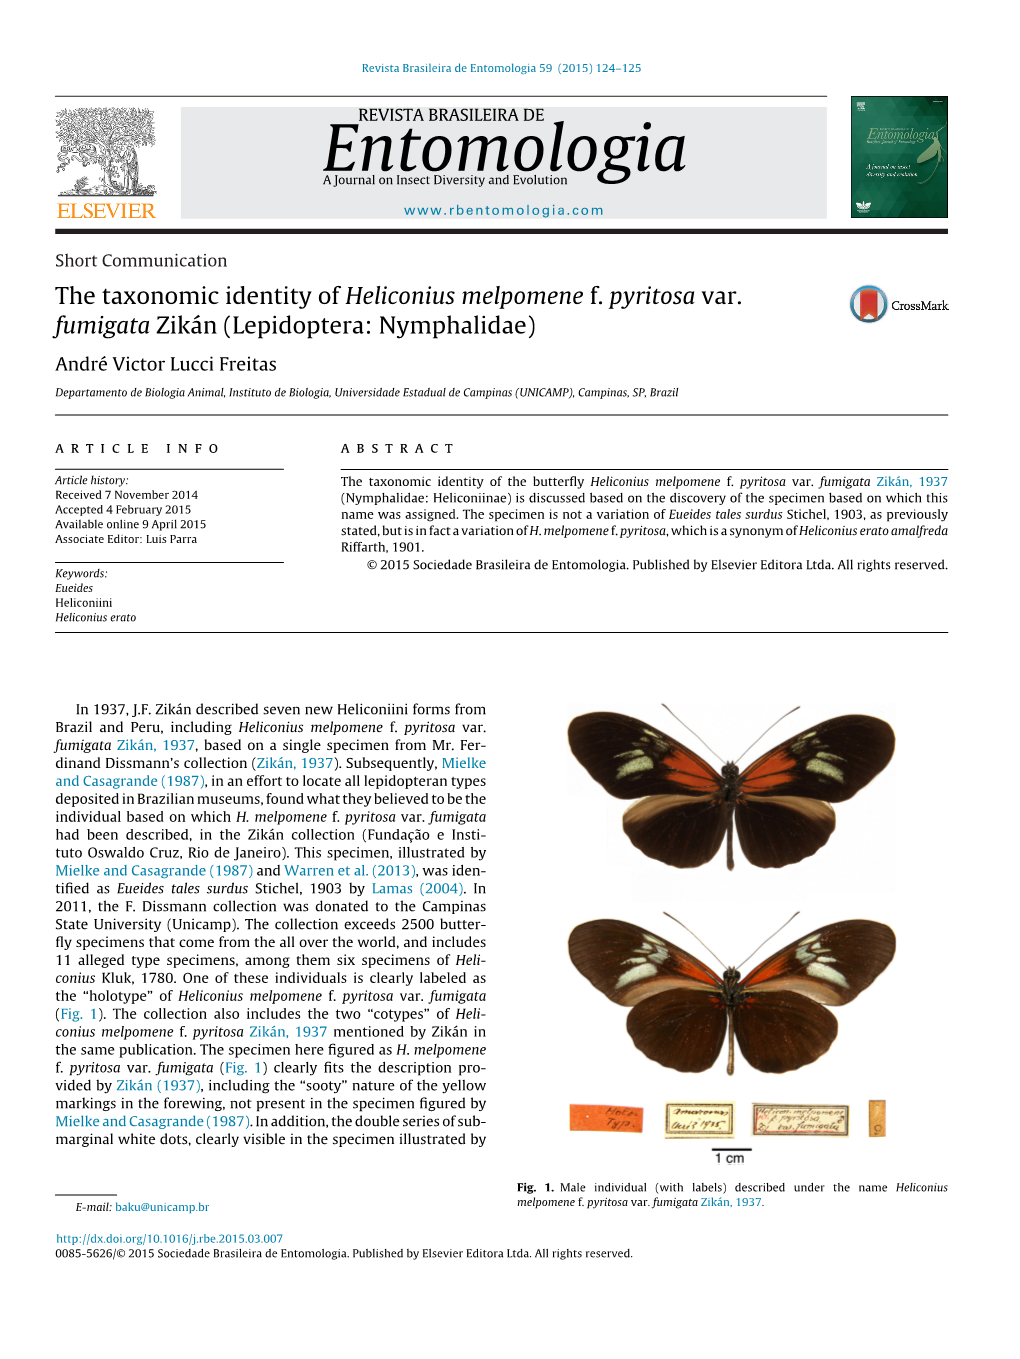 The Taxonomic Identity of Heliconius Melpomene F. Pyritosa Var. Fumigata Zikán (Lepidoptera: Nymphalidae)